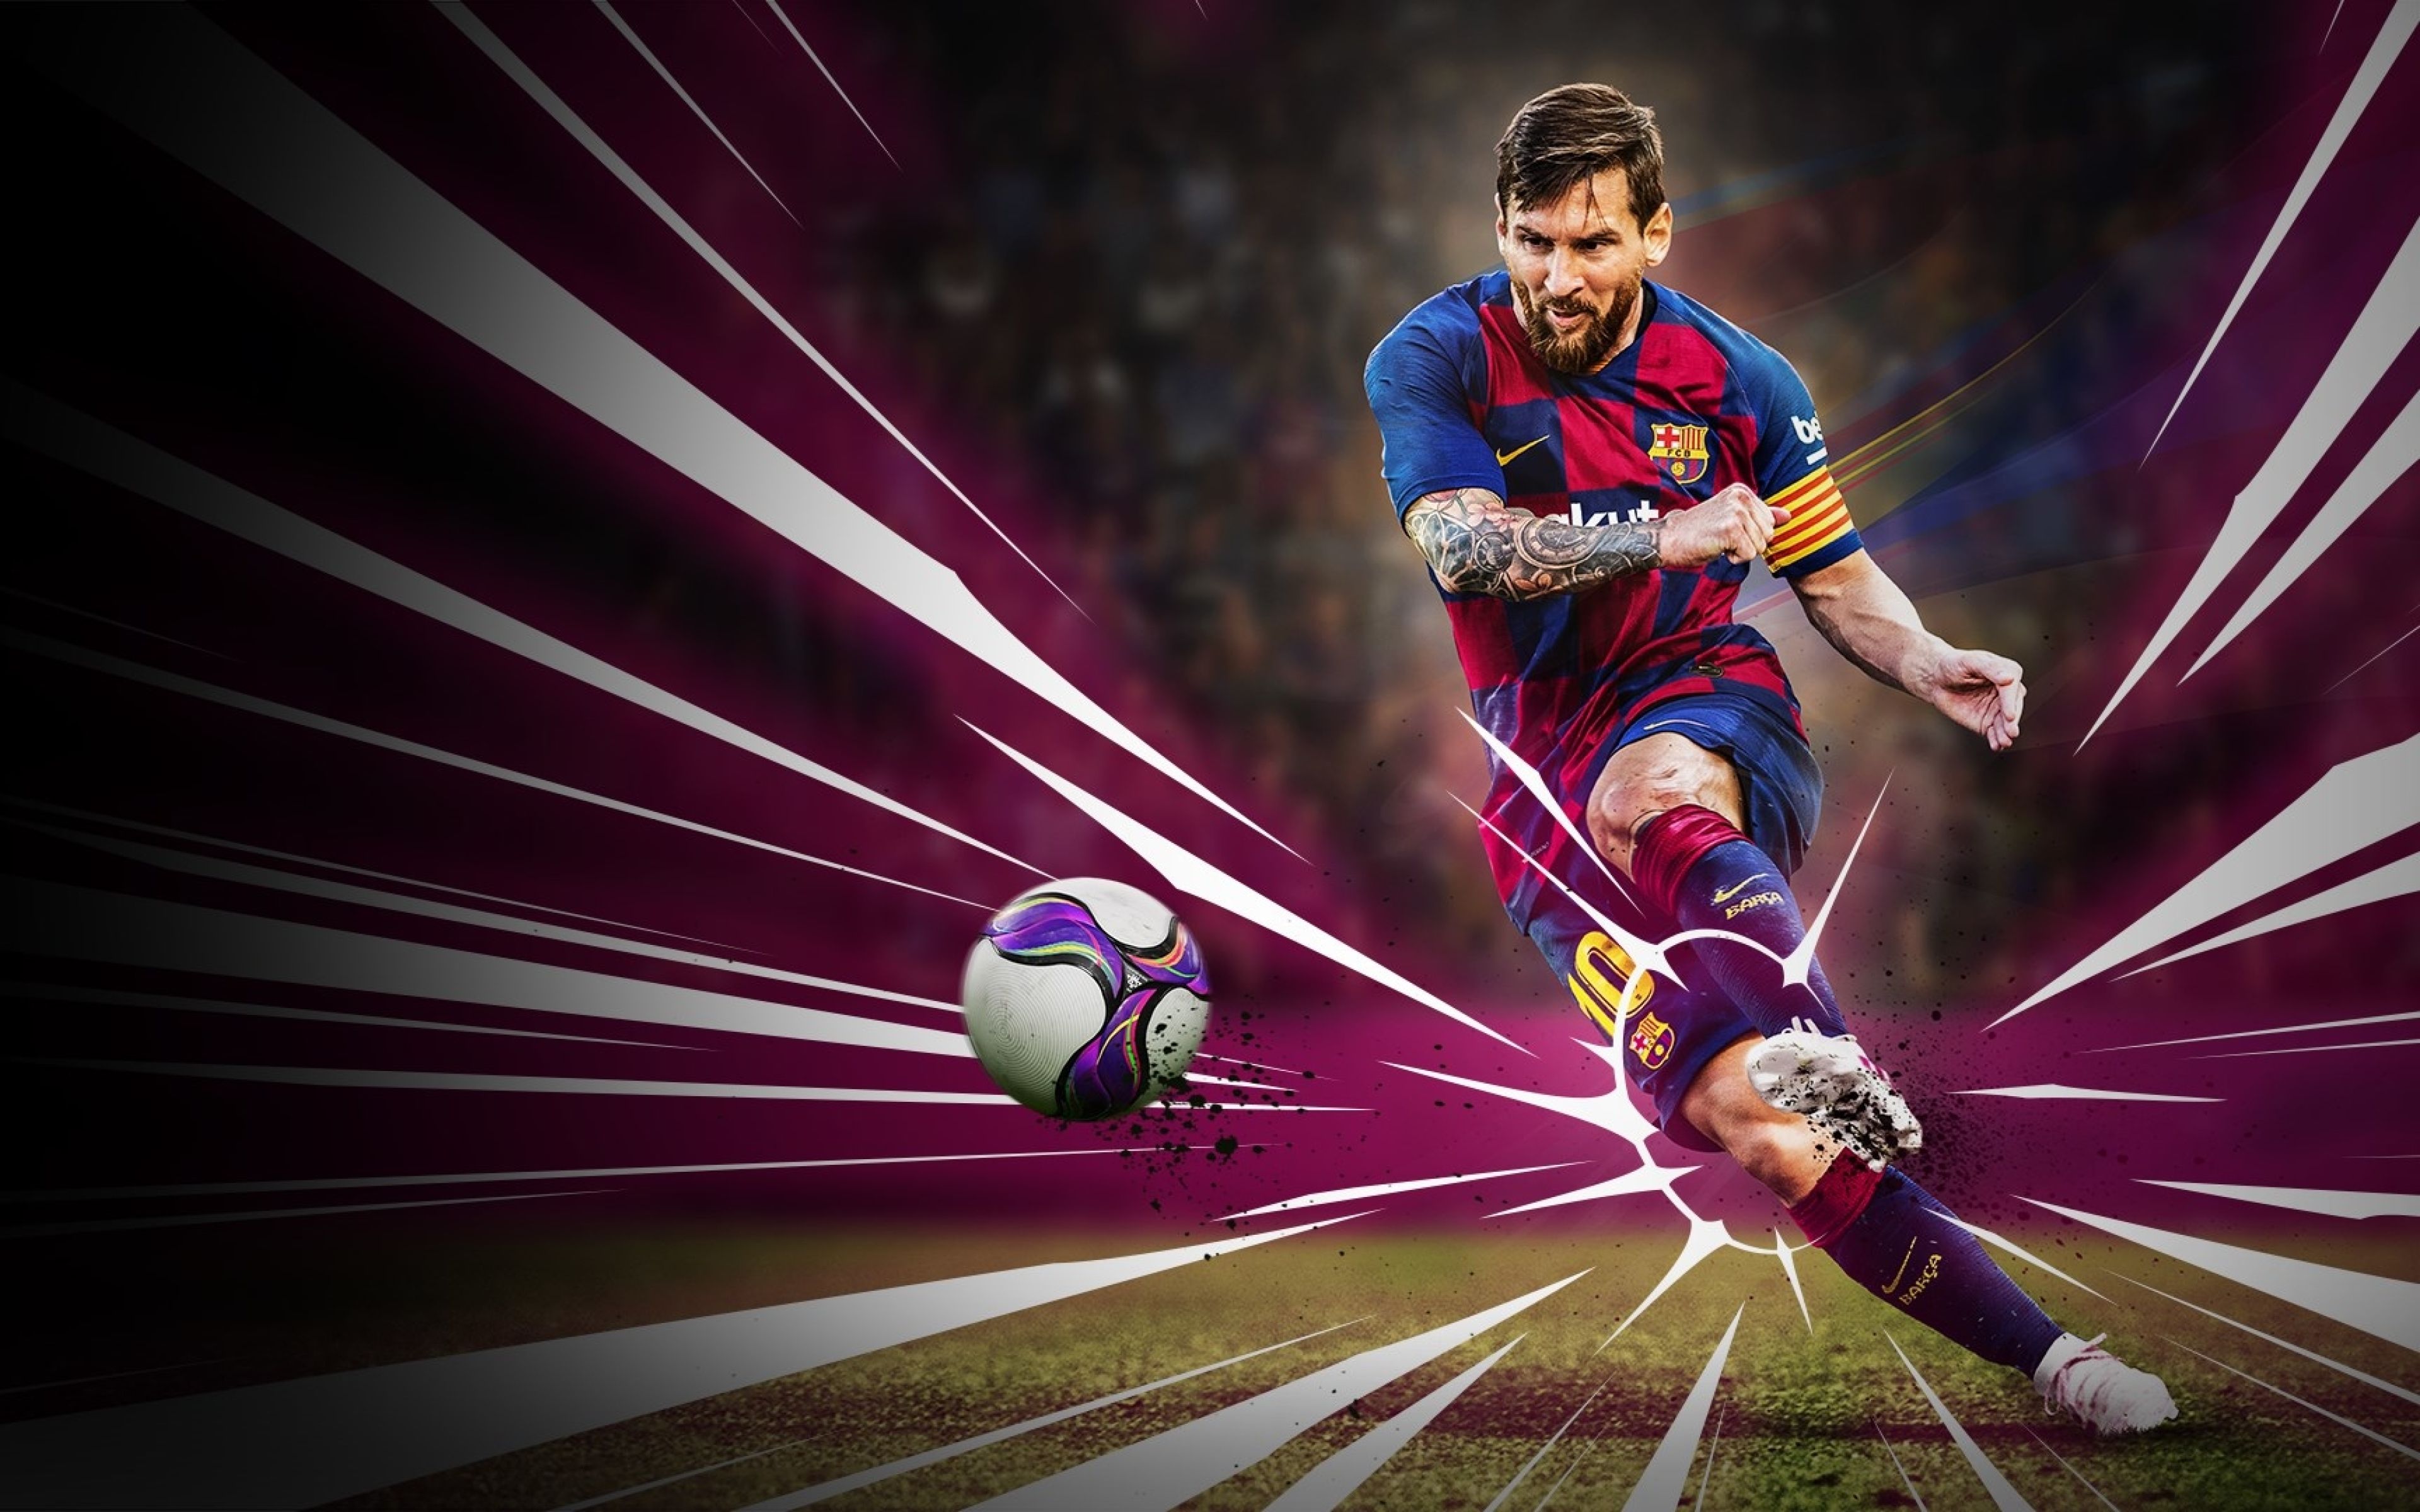 Free download Lionel Messi Wallpaper 2020 [3840x2400]